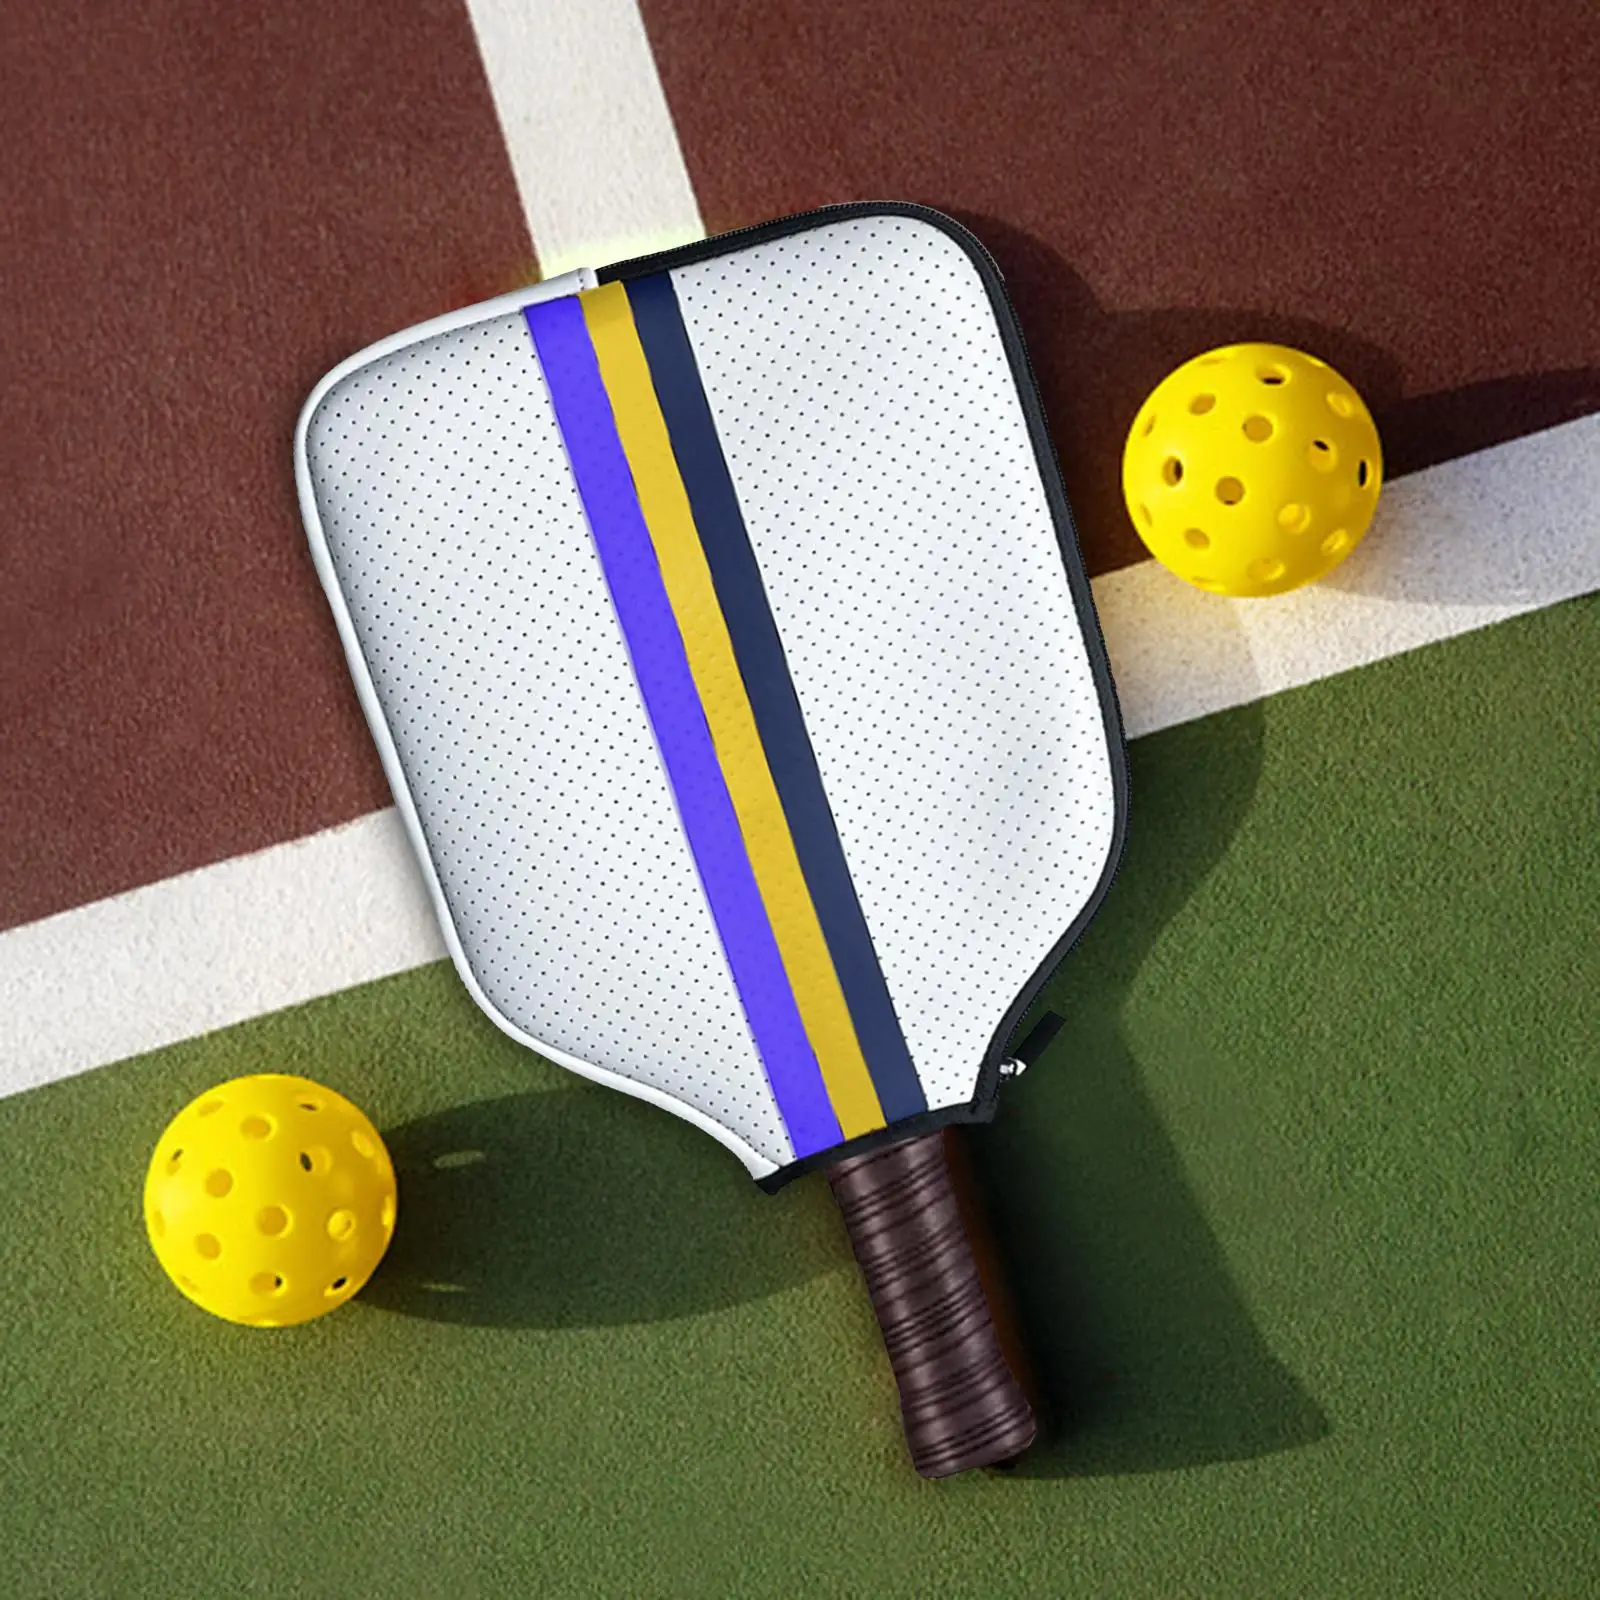 Racket Sleeve Zipper Accessories Waterproof Pouch Neoprene Pickleball Paddle Cover Holder for Sports Exercise Training Women Men